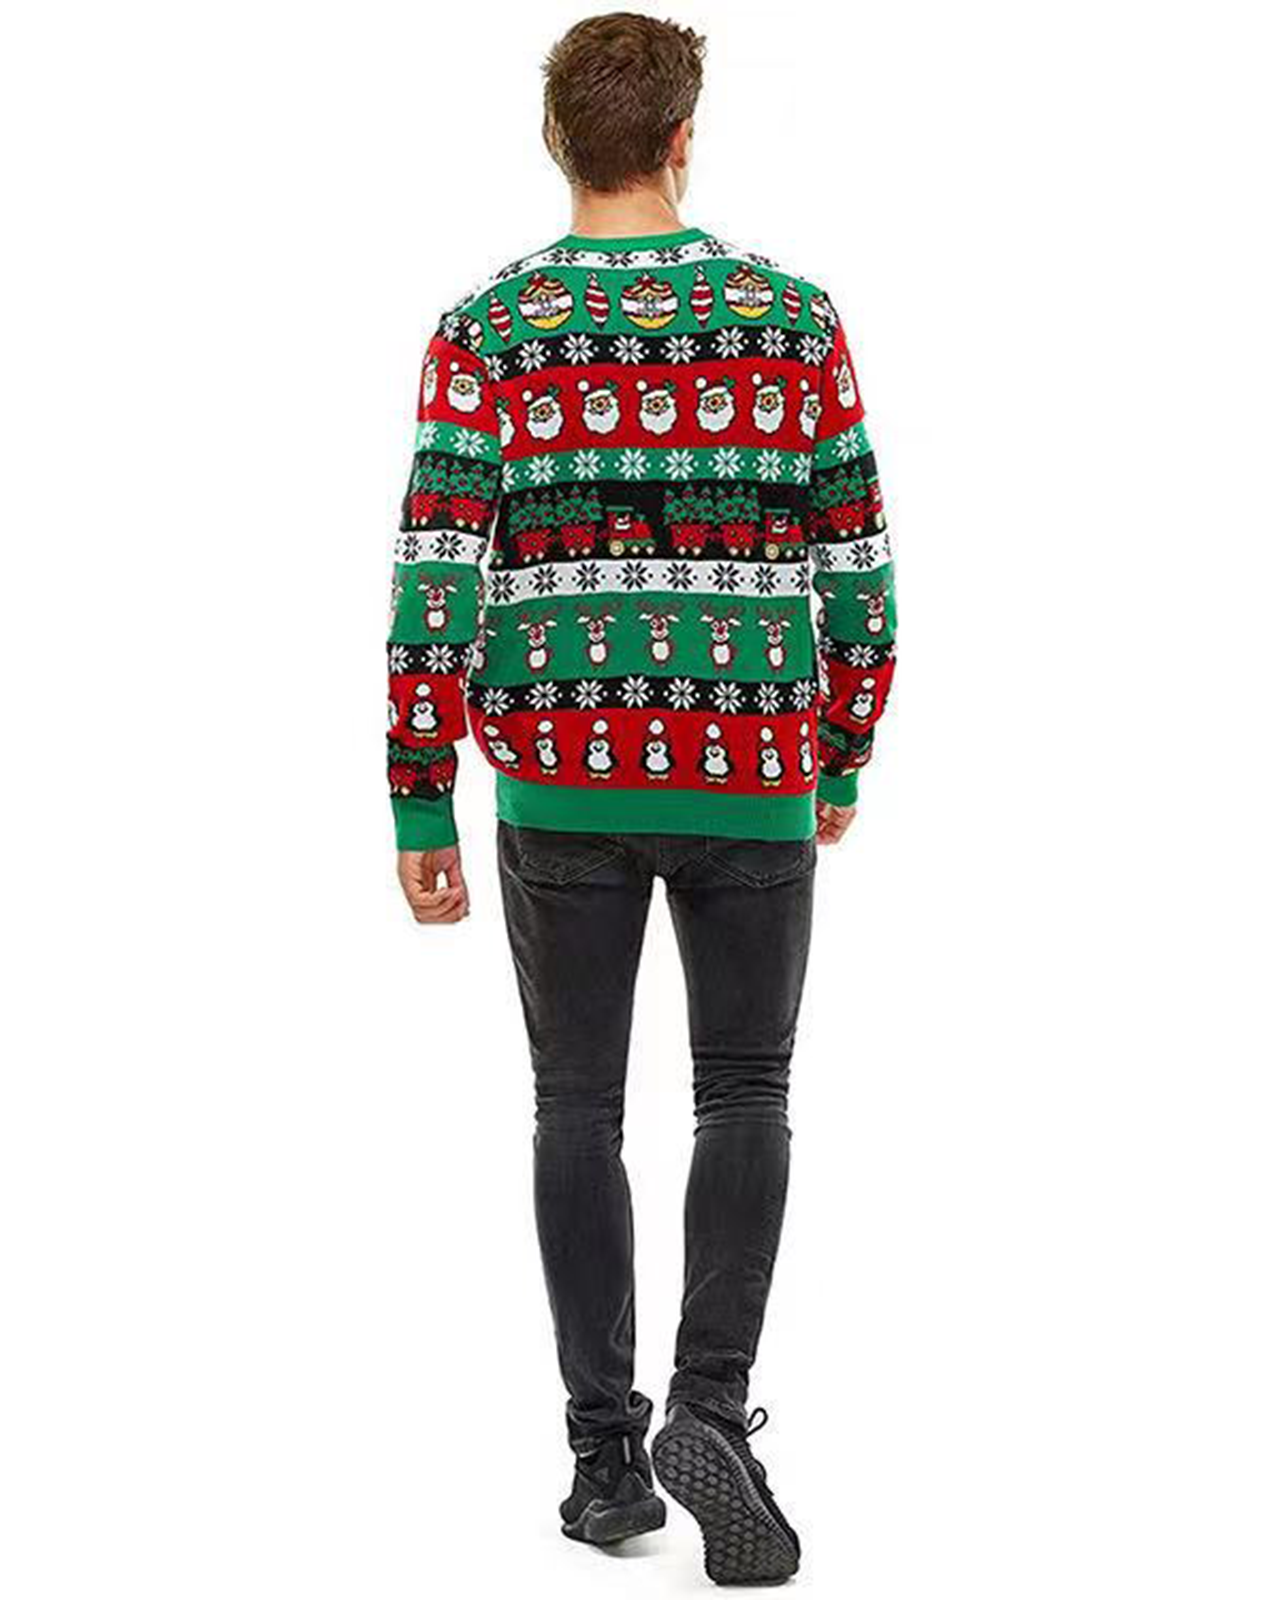 Deluxe Festive Fun Christmas Sweater